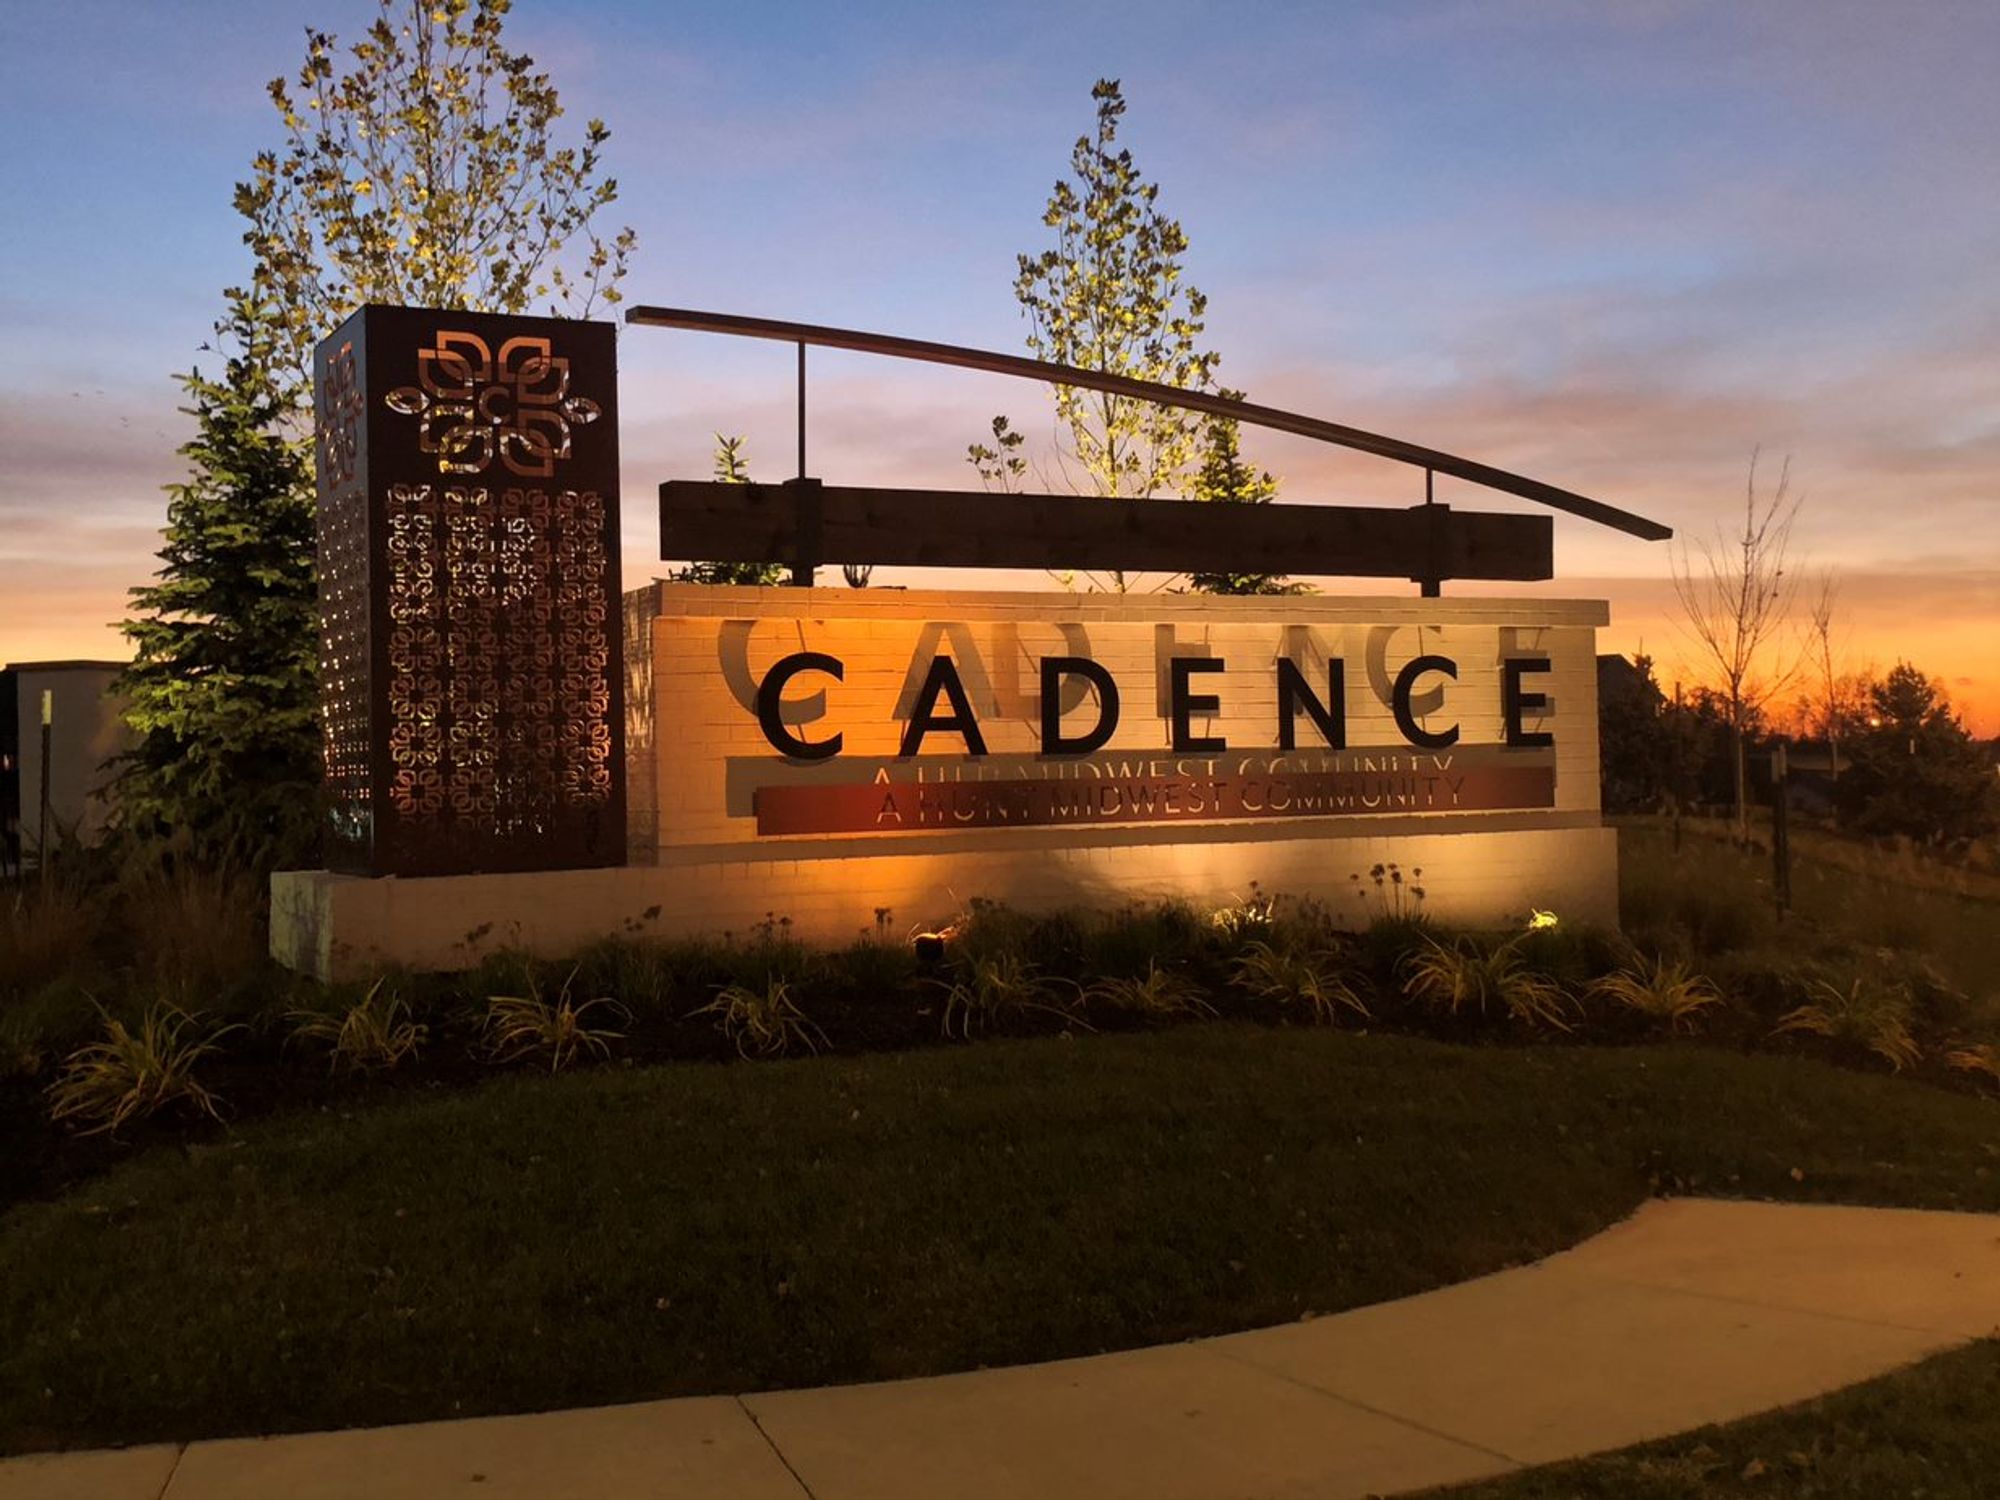 Cadence new home community entry monument night Kansas City